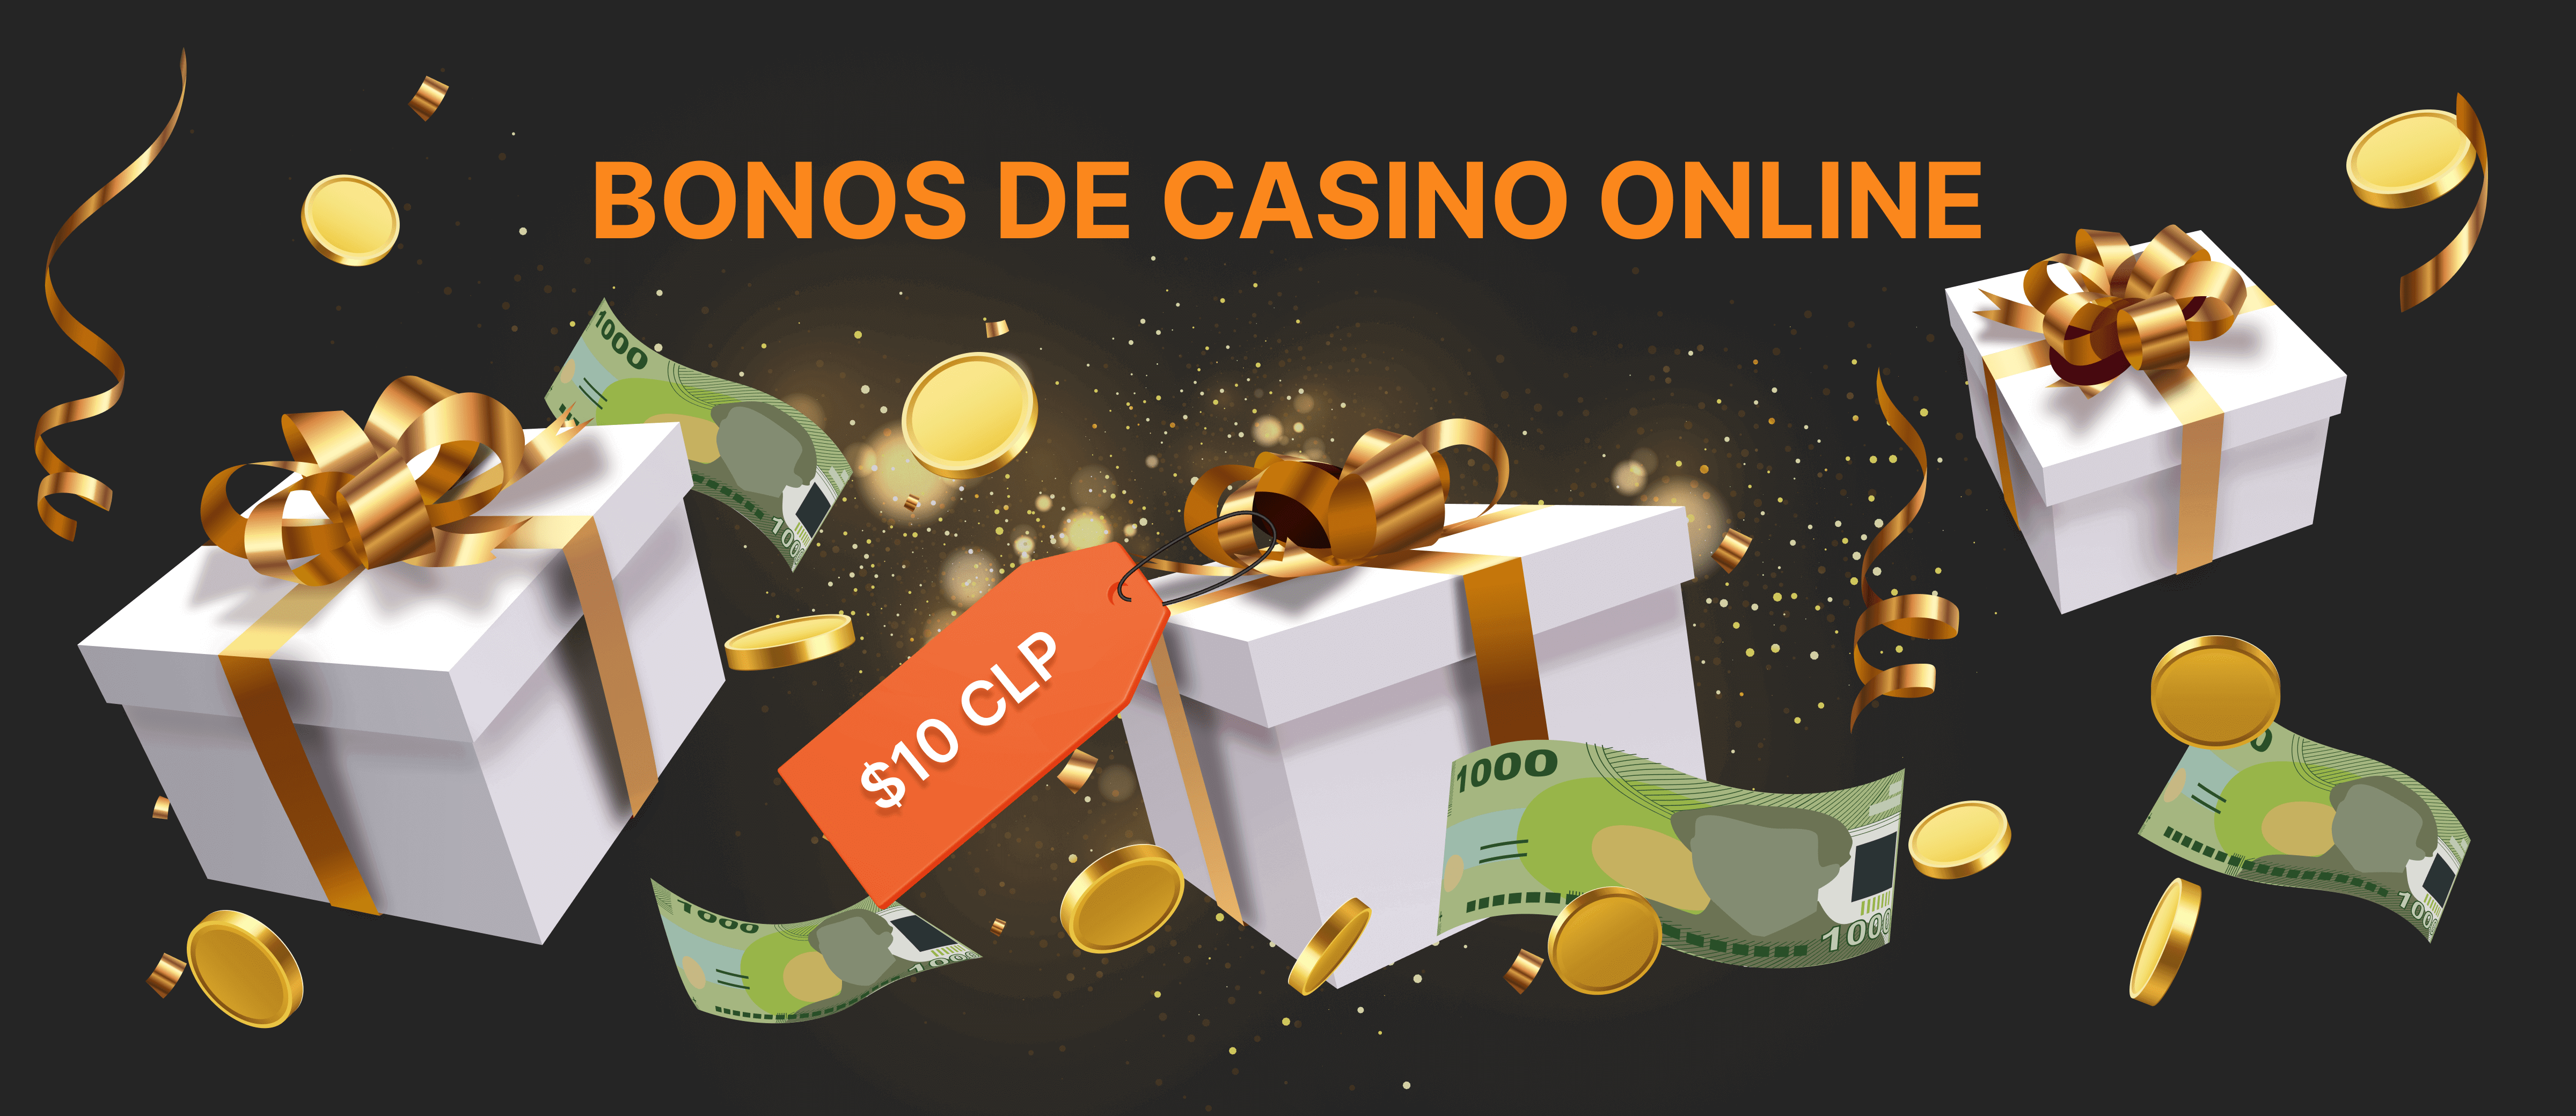 bonos de casino online chile